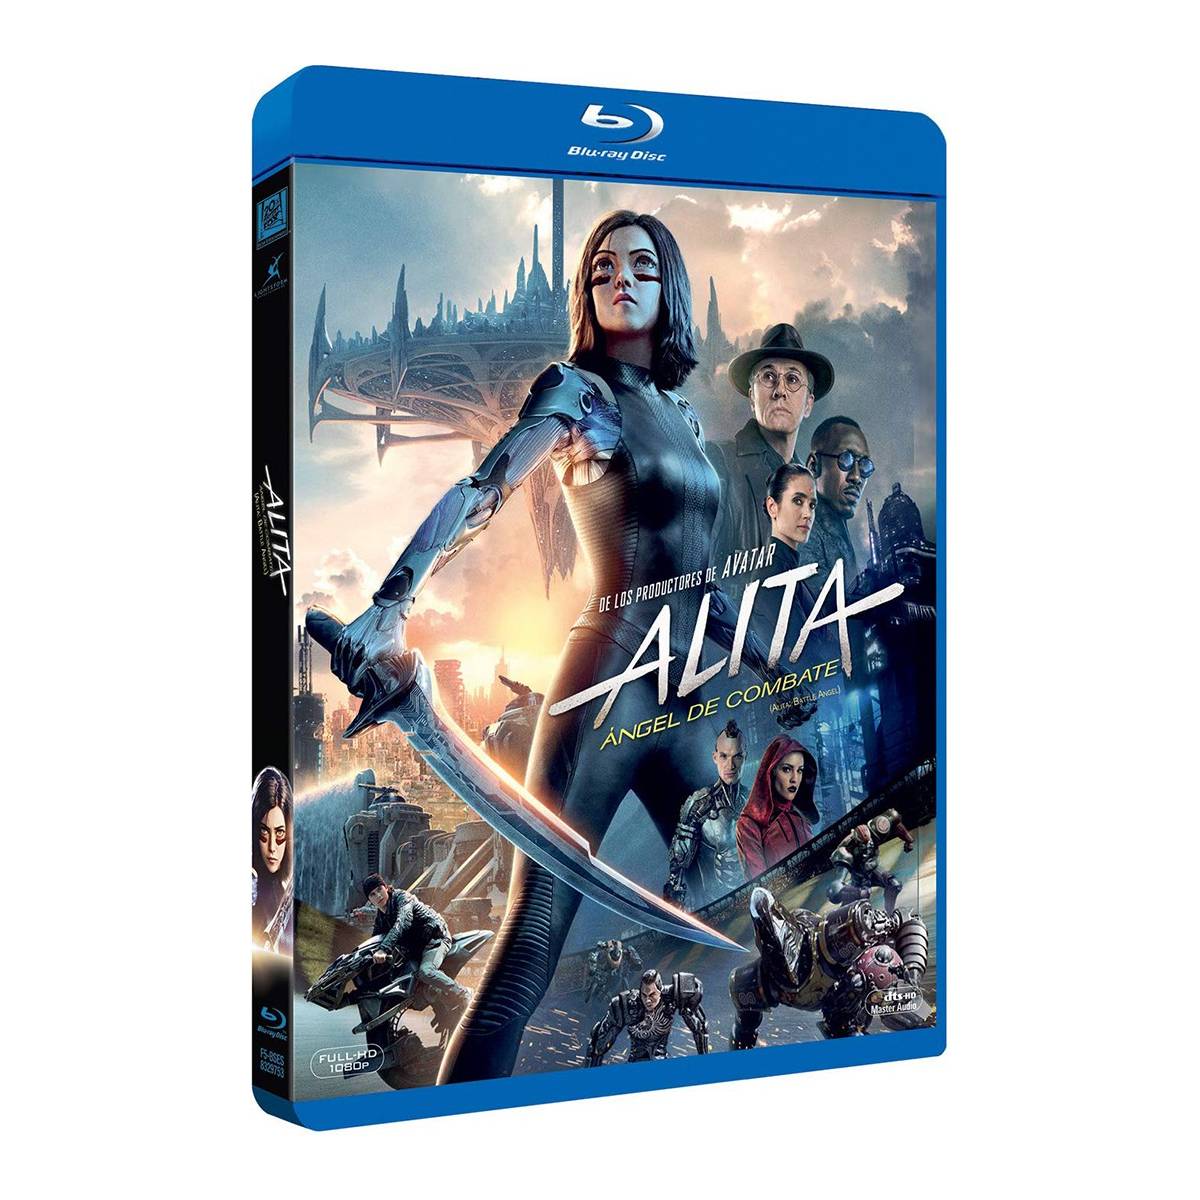 Alita, Ángel de combate (Blu-ray) (Alita, Battle Angel)